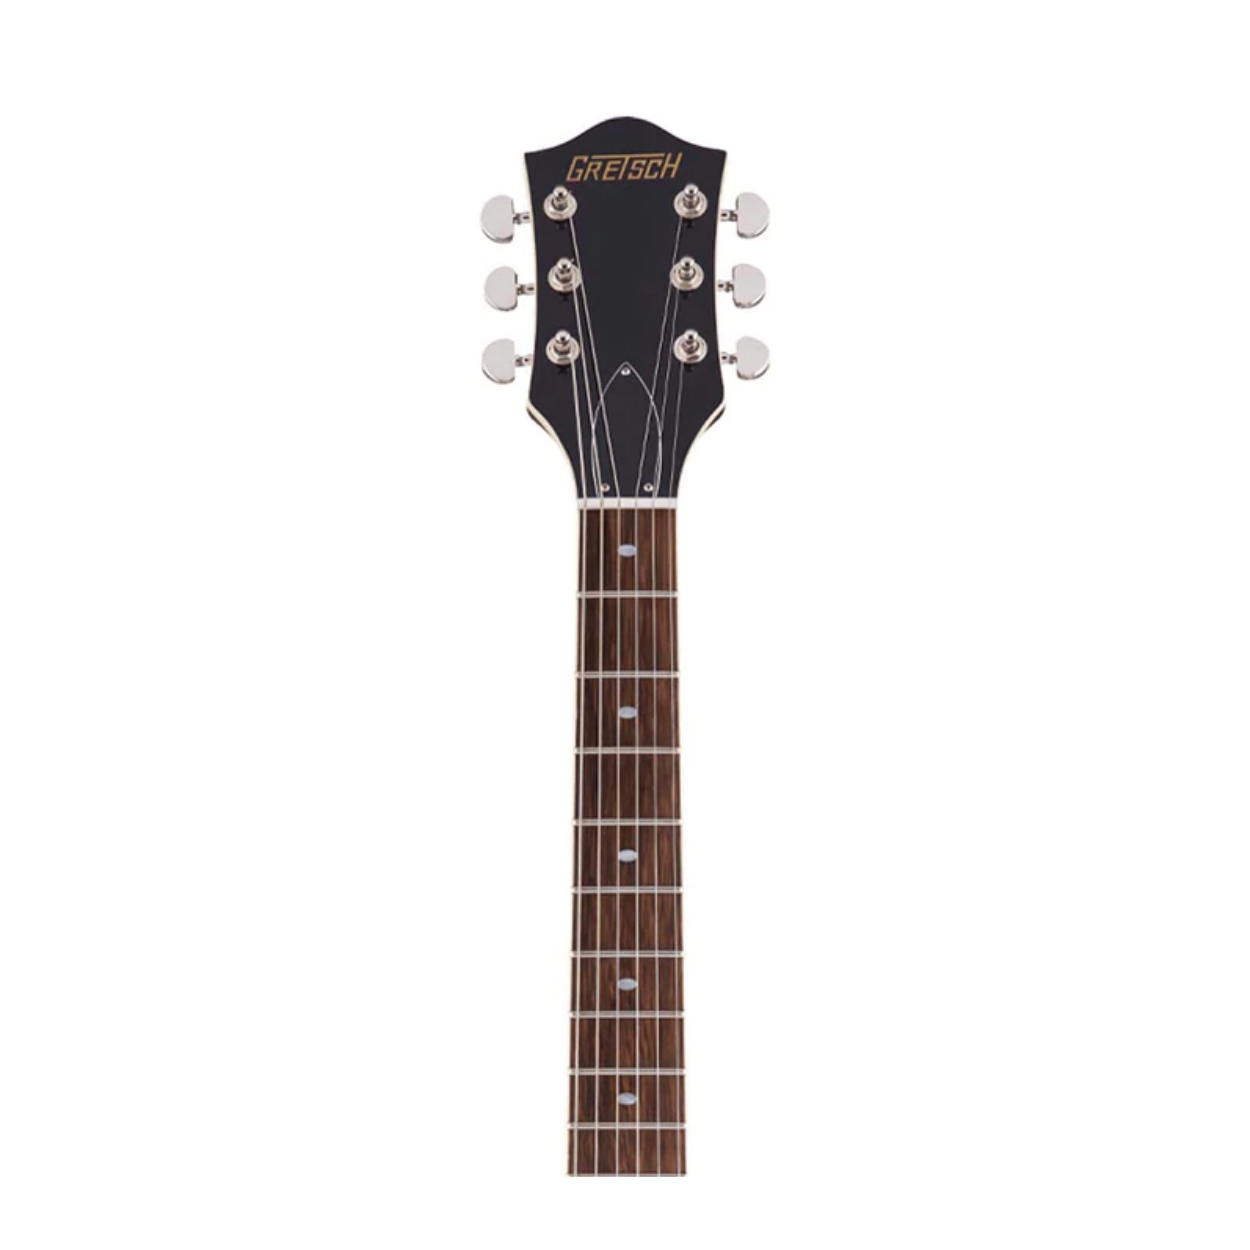 Gretsch G2622-P90 Streamliner Center Block Double-Cut Electric Guitar, Laurel FB, Claret Burst